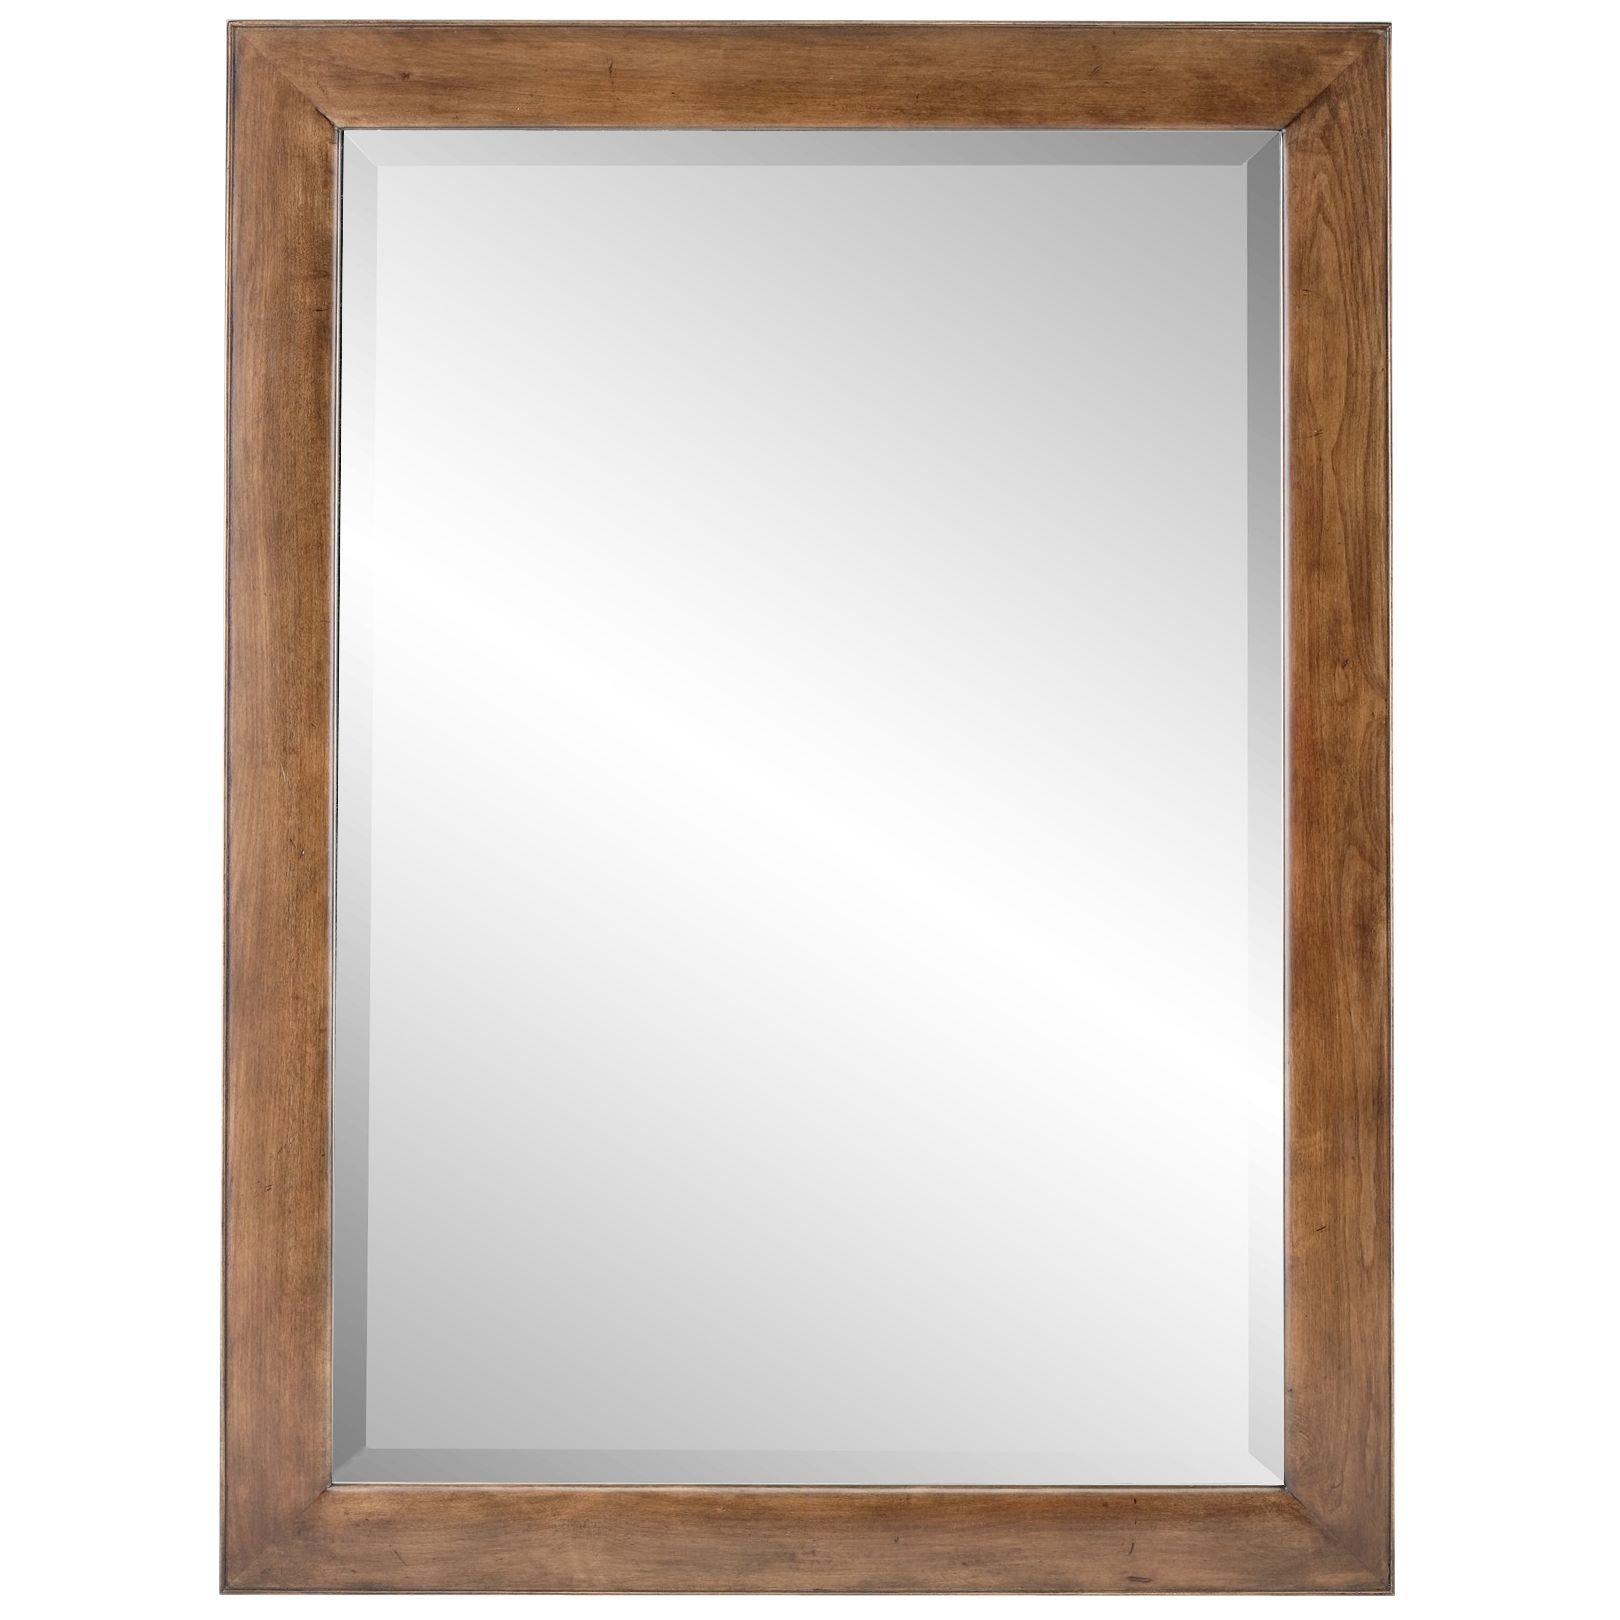 John Lewis Lille Mirror, H110 x W80cm